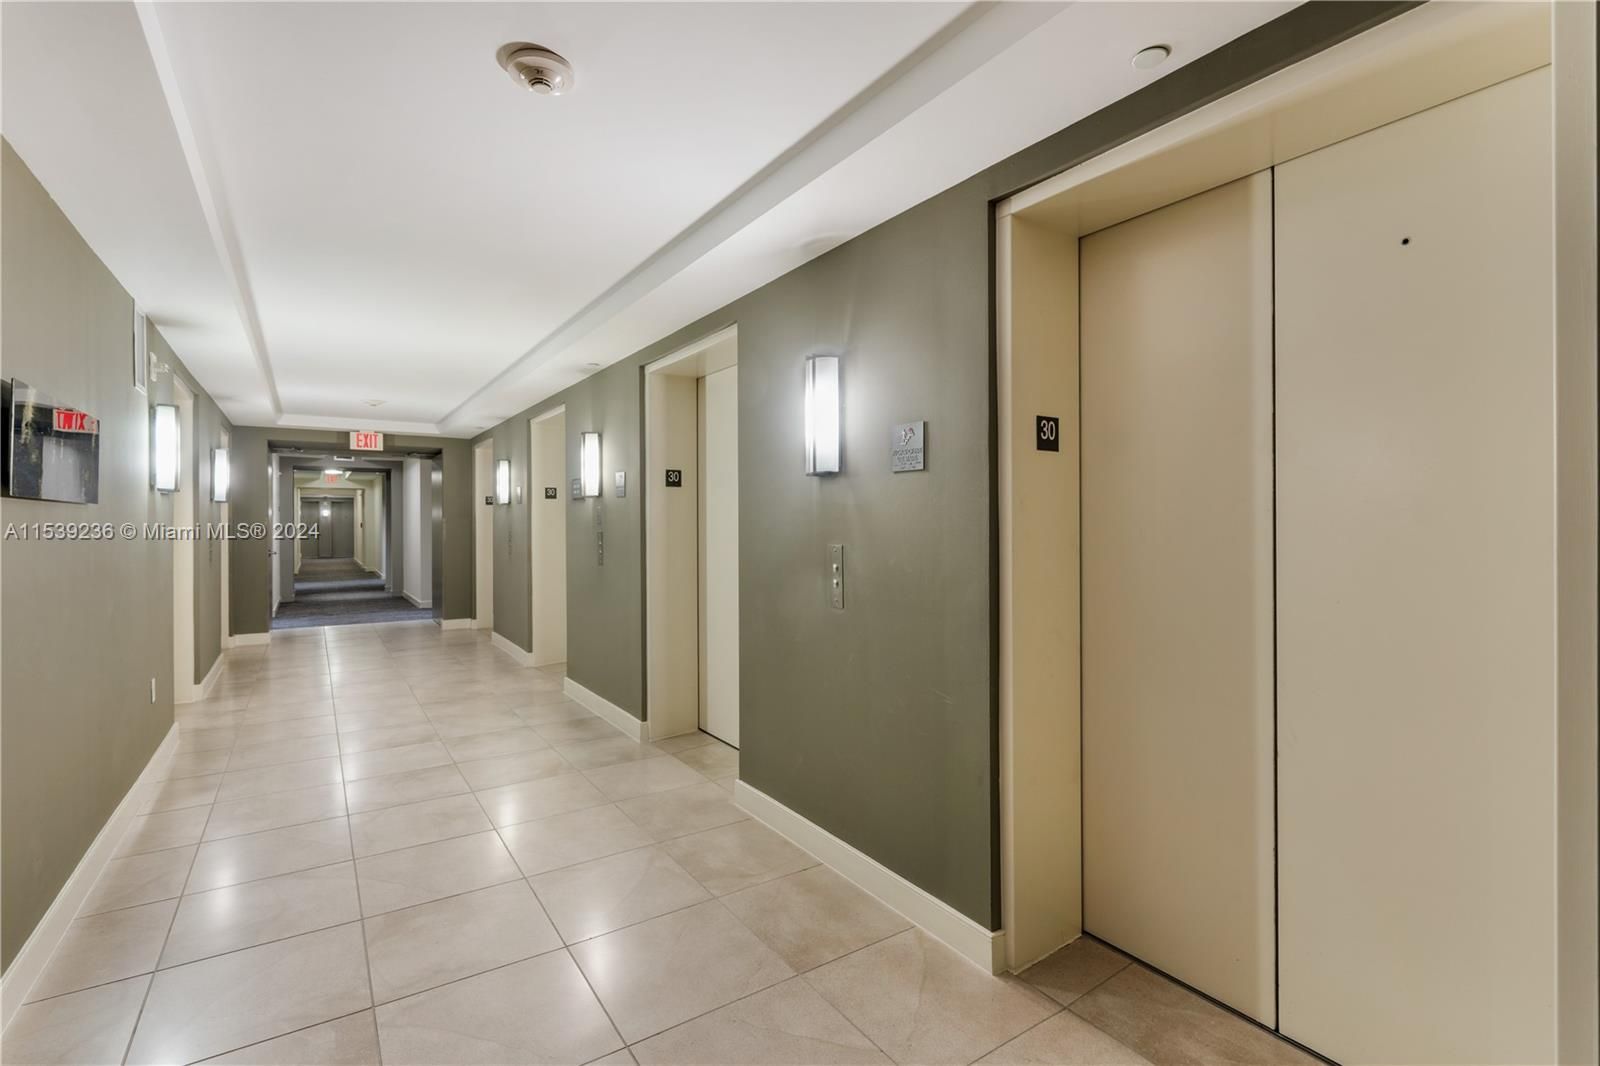 Hallway with 5 elevators